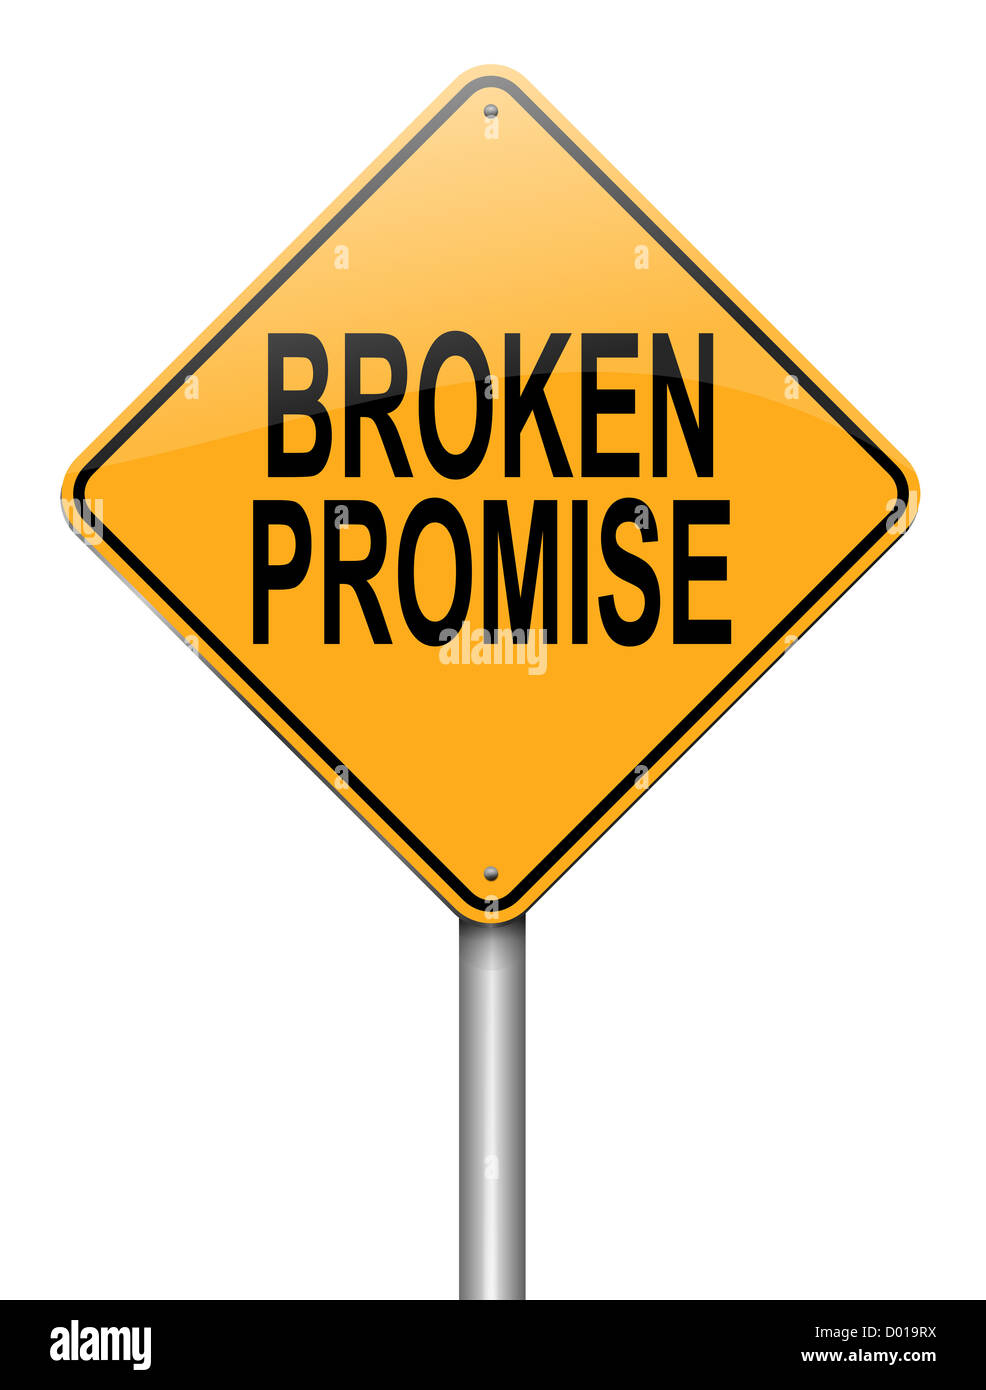 Broken promise concept. Stock Photo